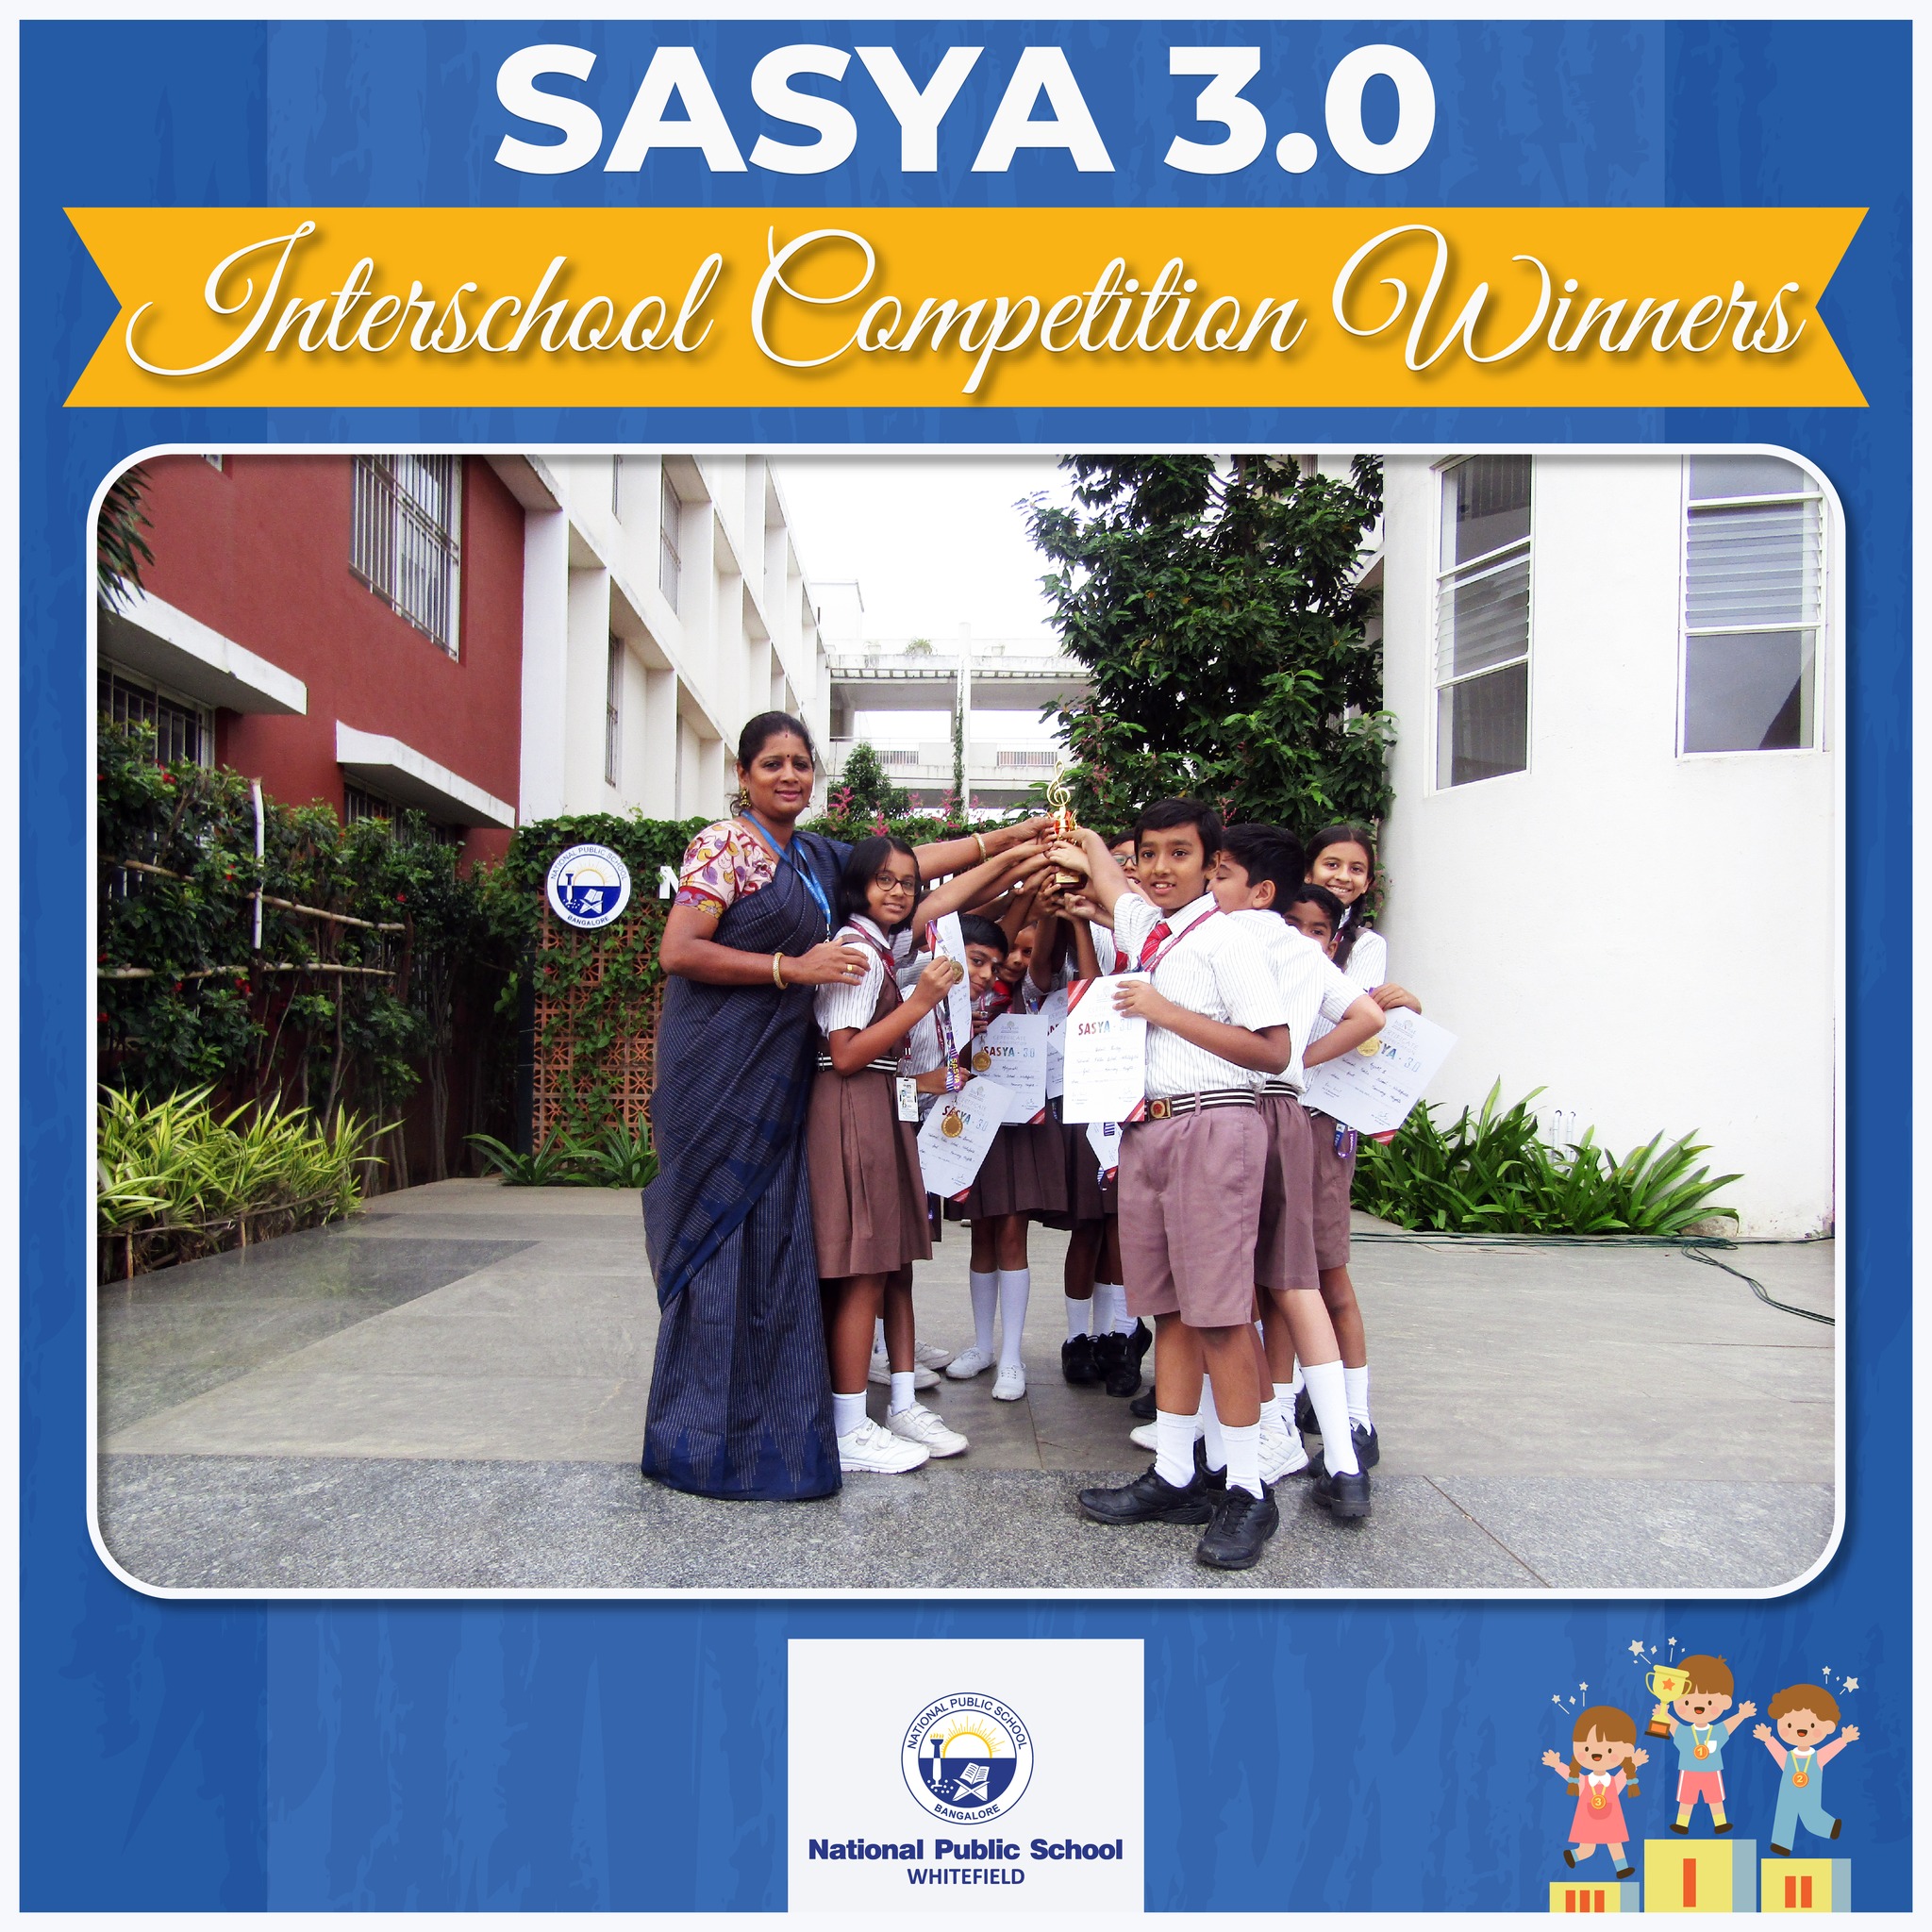 SASYA 3.0 Inter-School Competition